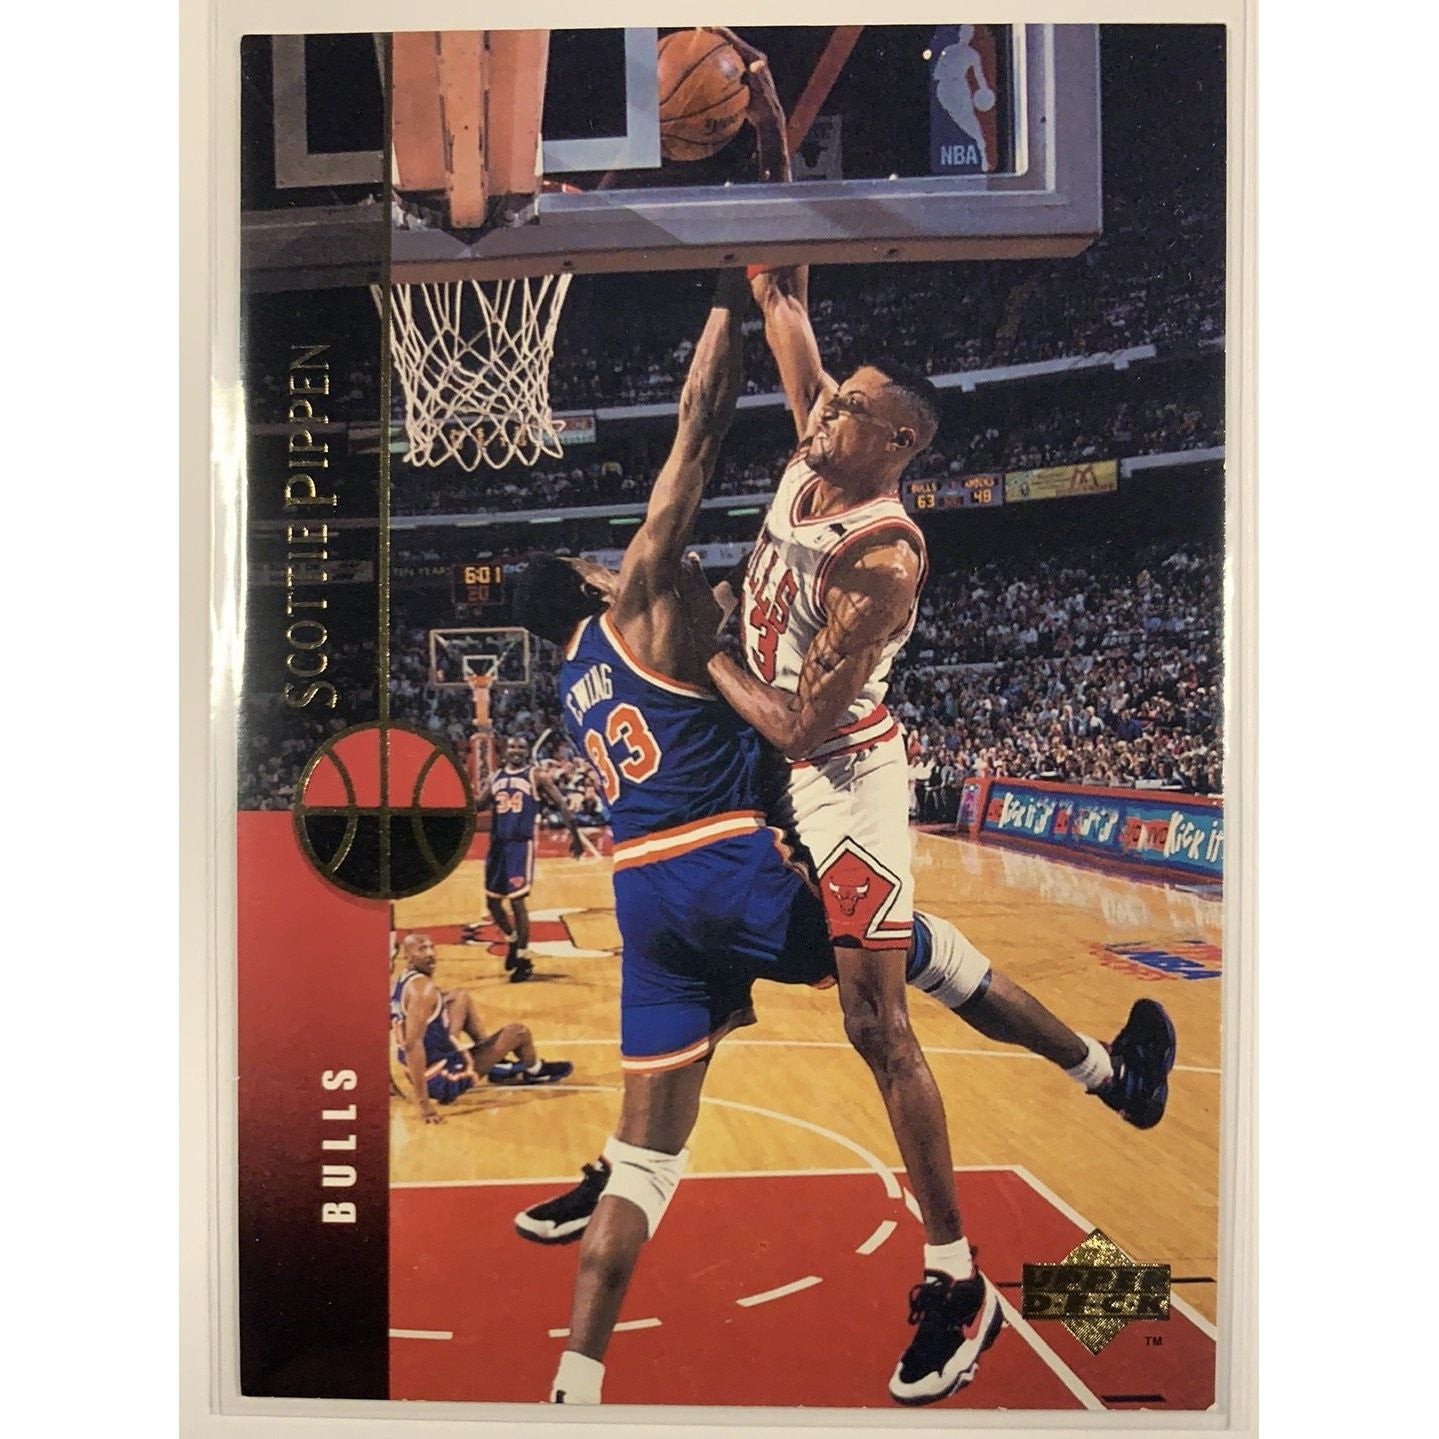  1994-95 Upper Deck Scottie Pippen Base #127  Local Legends Cards & Collectibles